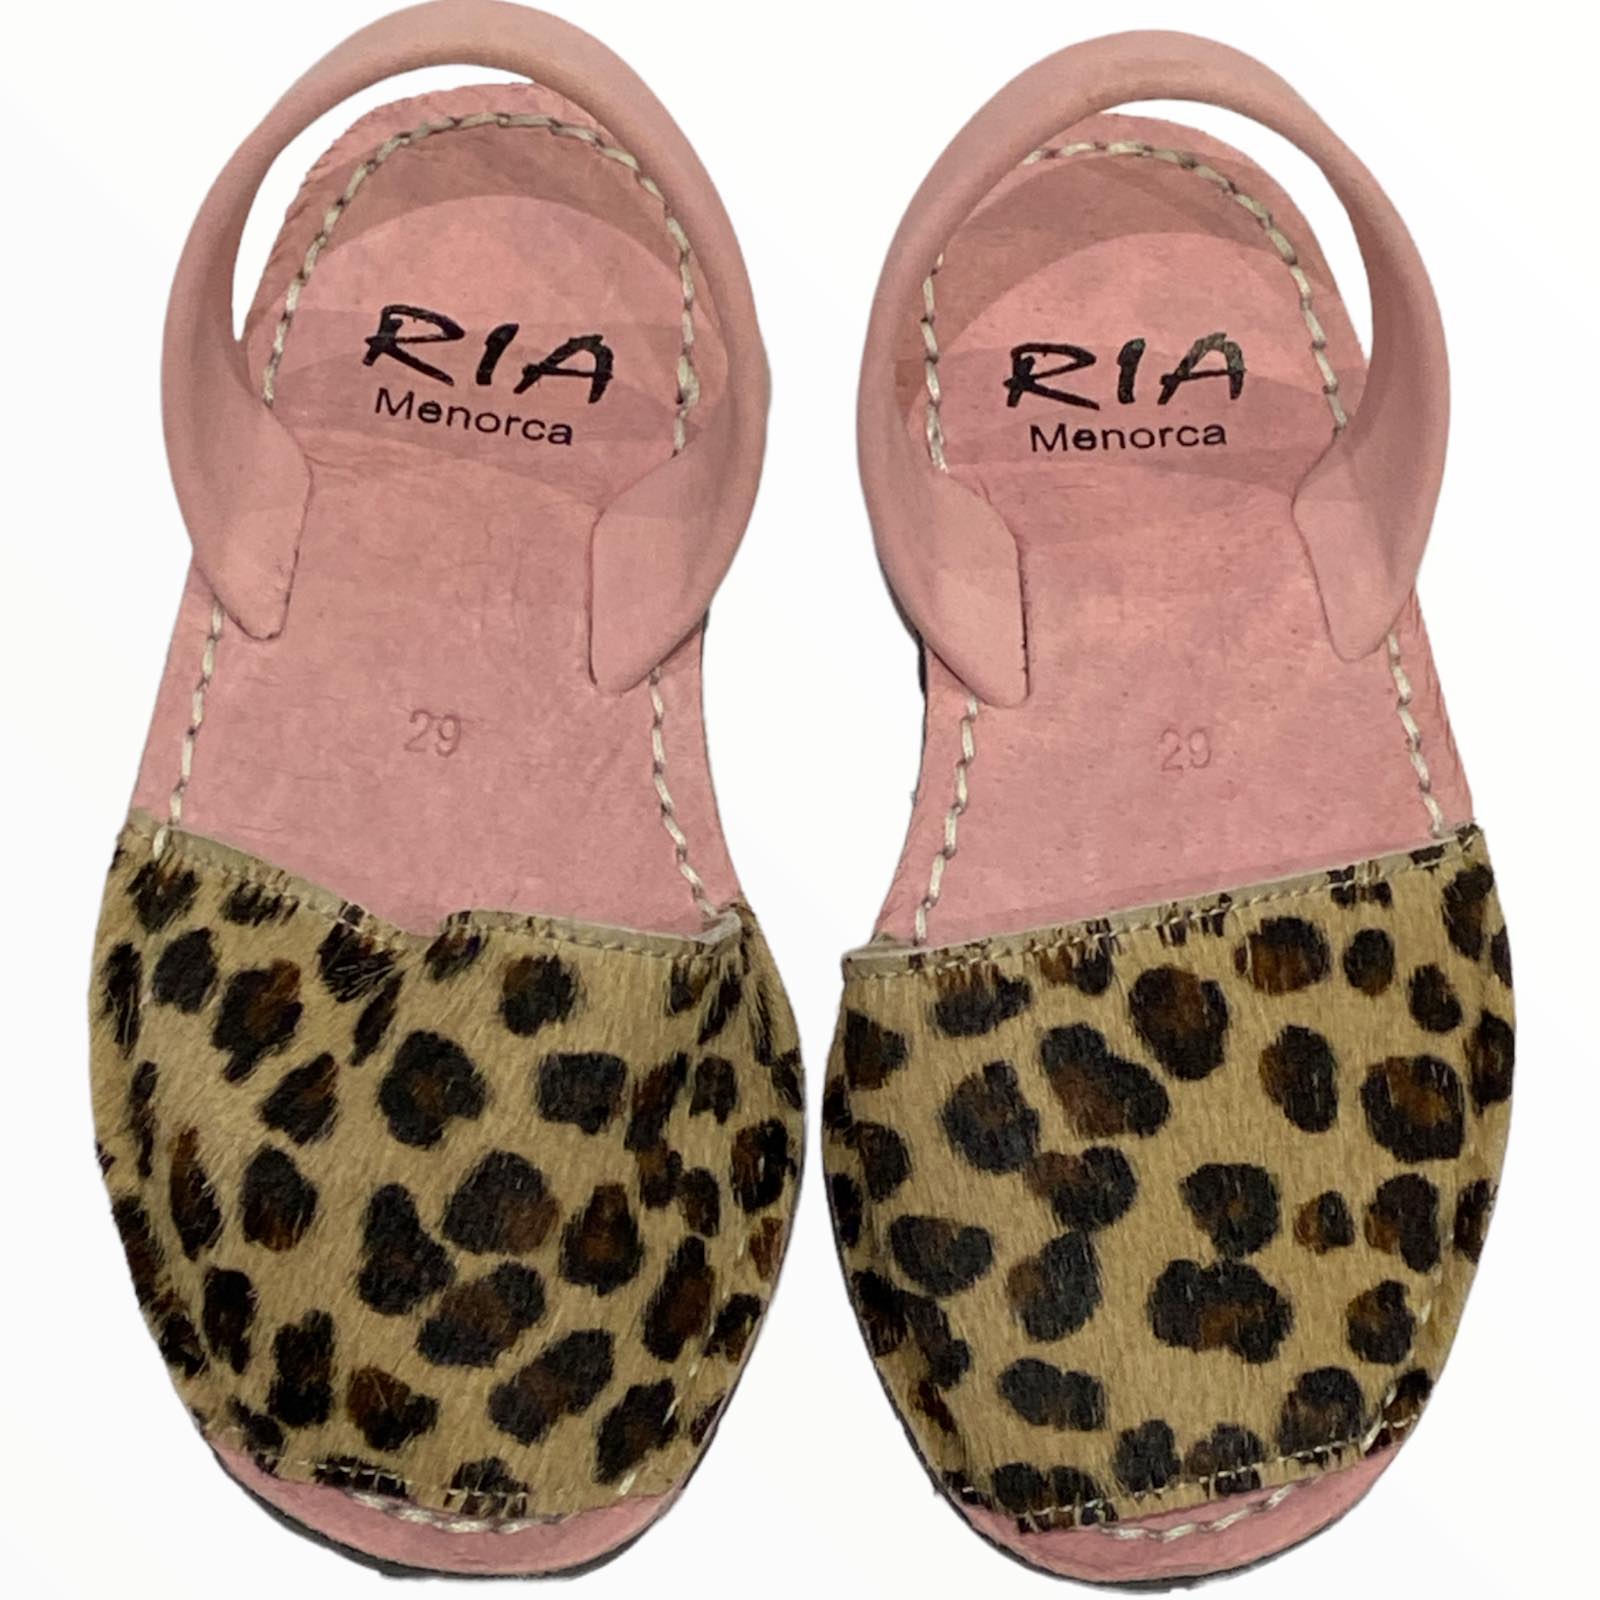 Pink leo-print calf-hair kids sandals